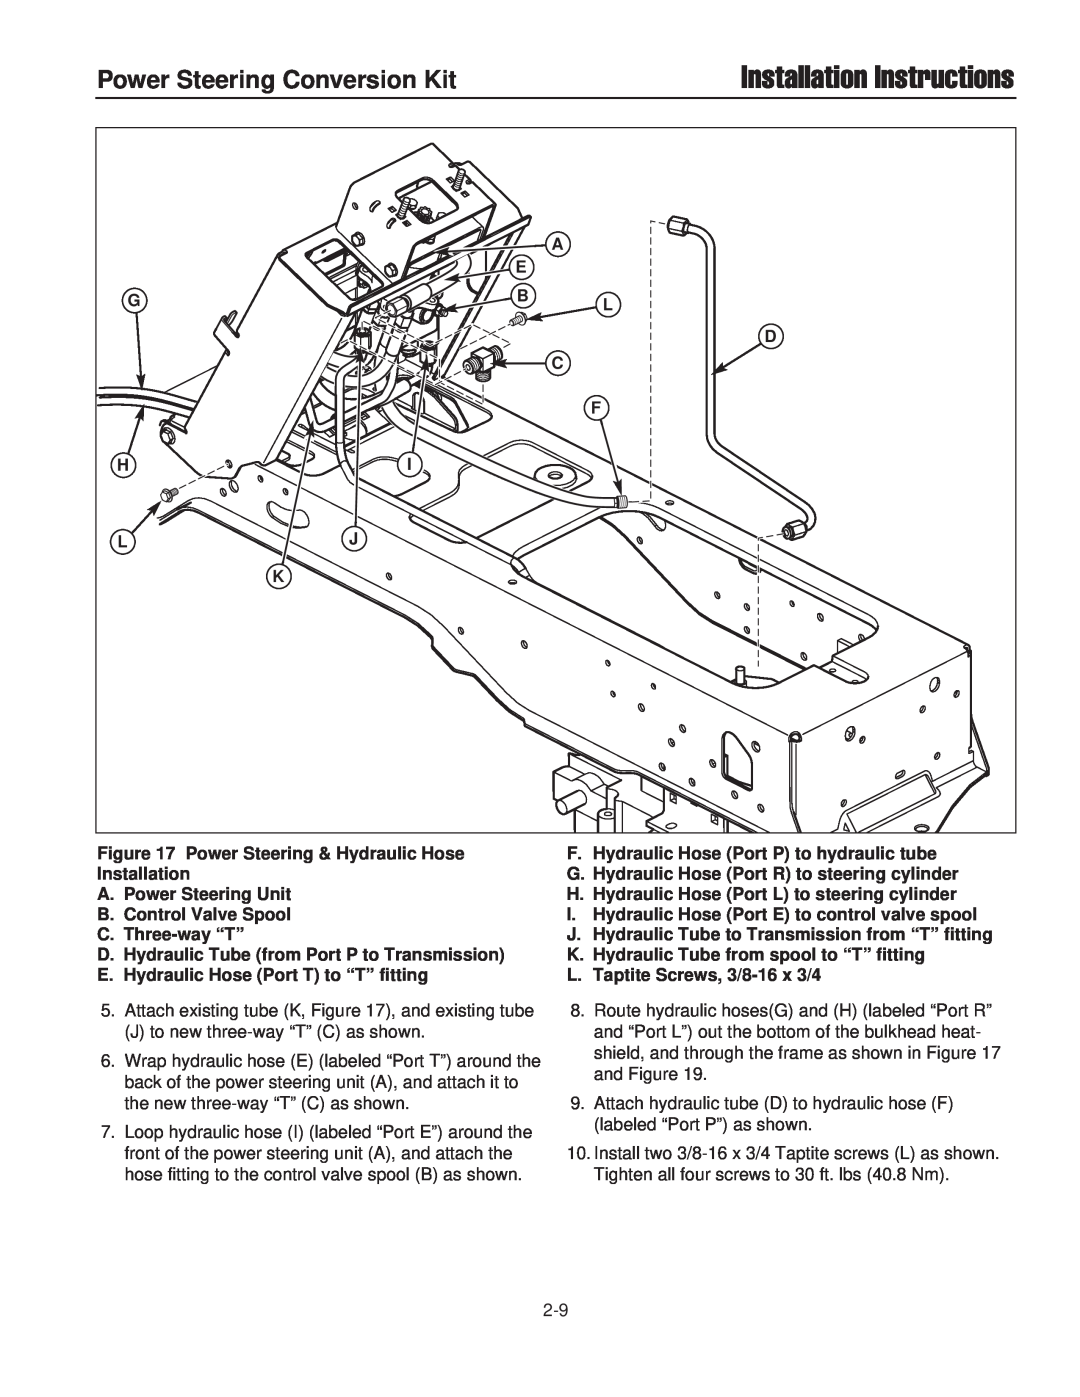 Briggs & Stratton 1687302, 1687286 installation instructions Installation Instructions, Power Steering Conversion Kit 